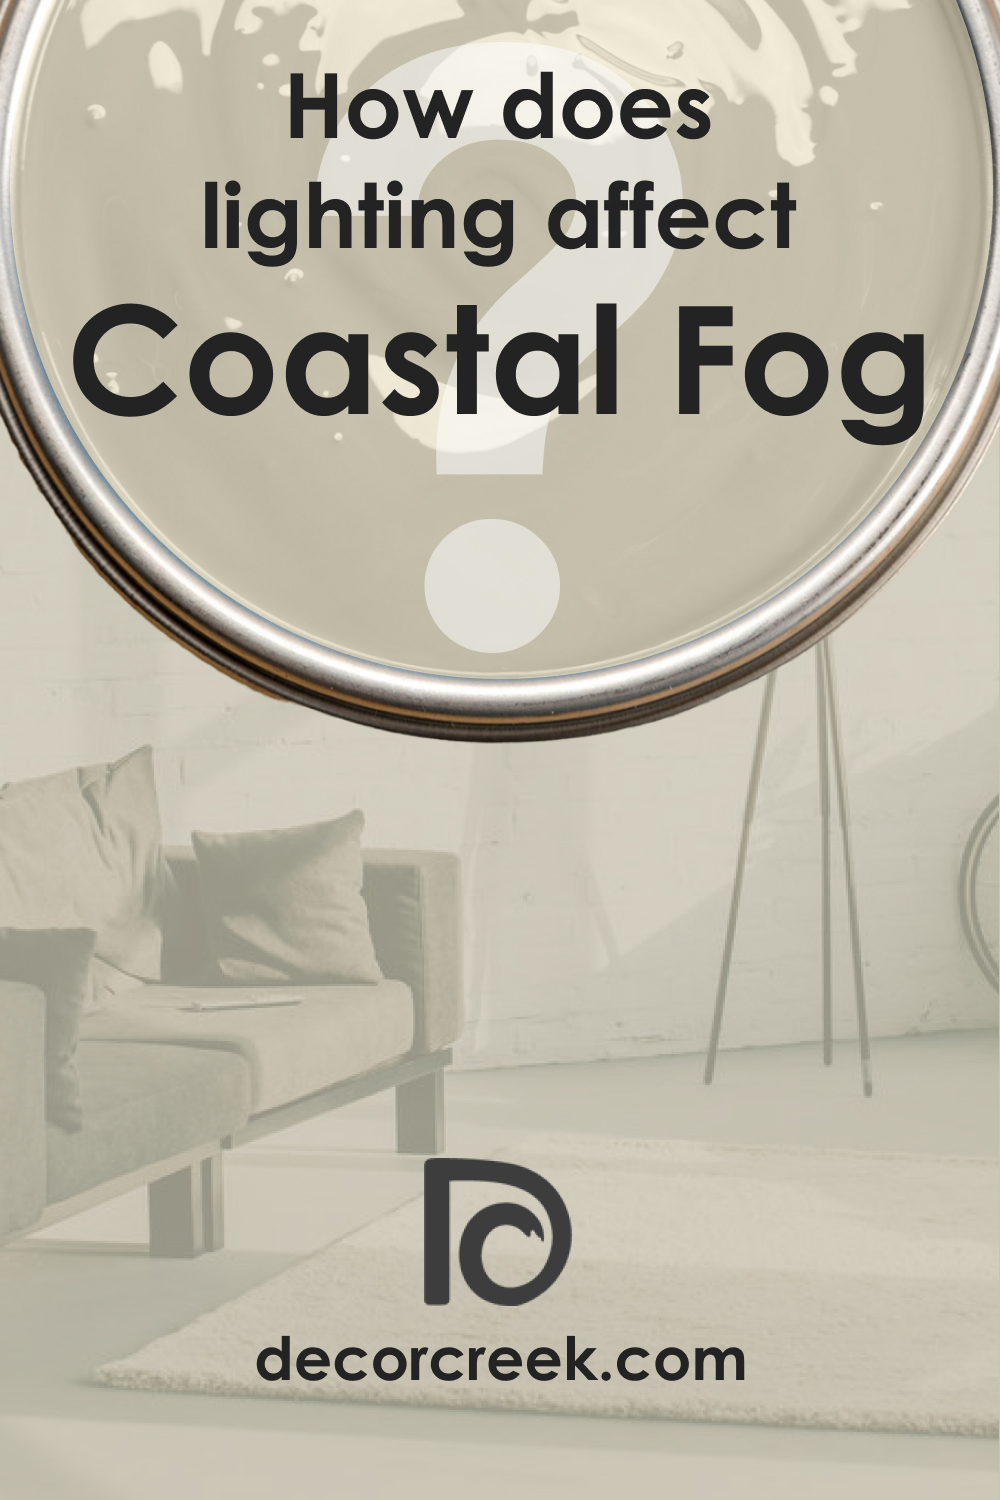 How Does Lighting Affect Coastal Fog AC-1?